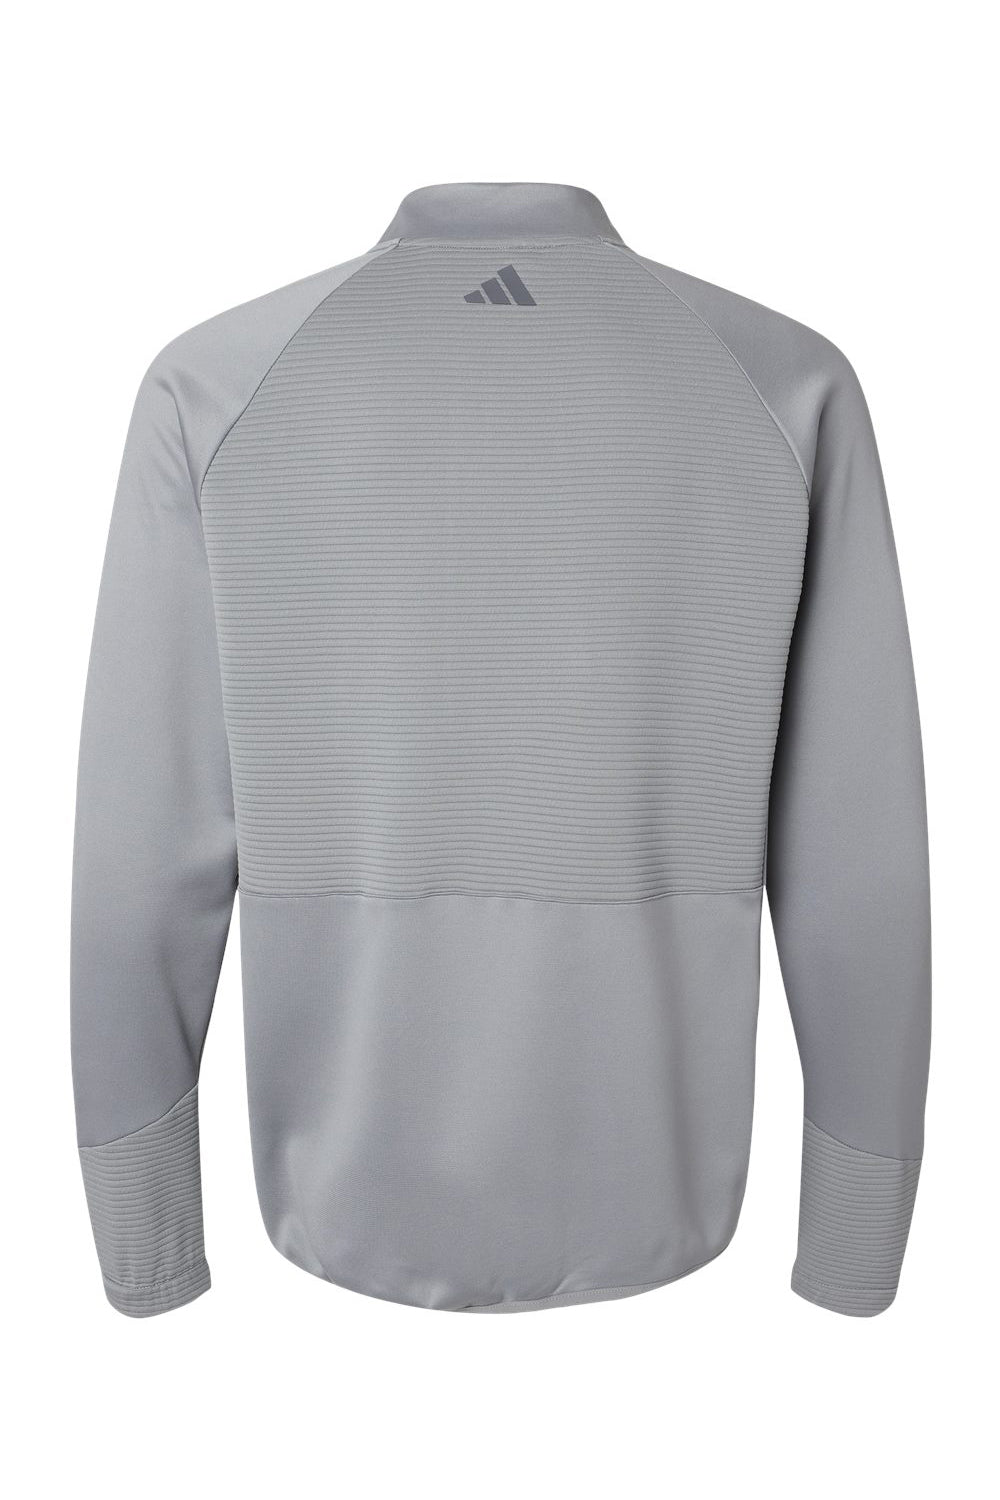 Adidas A587 Mens 1/4 Zip Sweatshirt Grey Flat Back